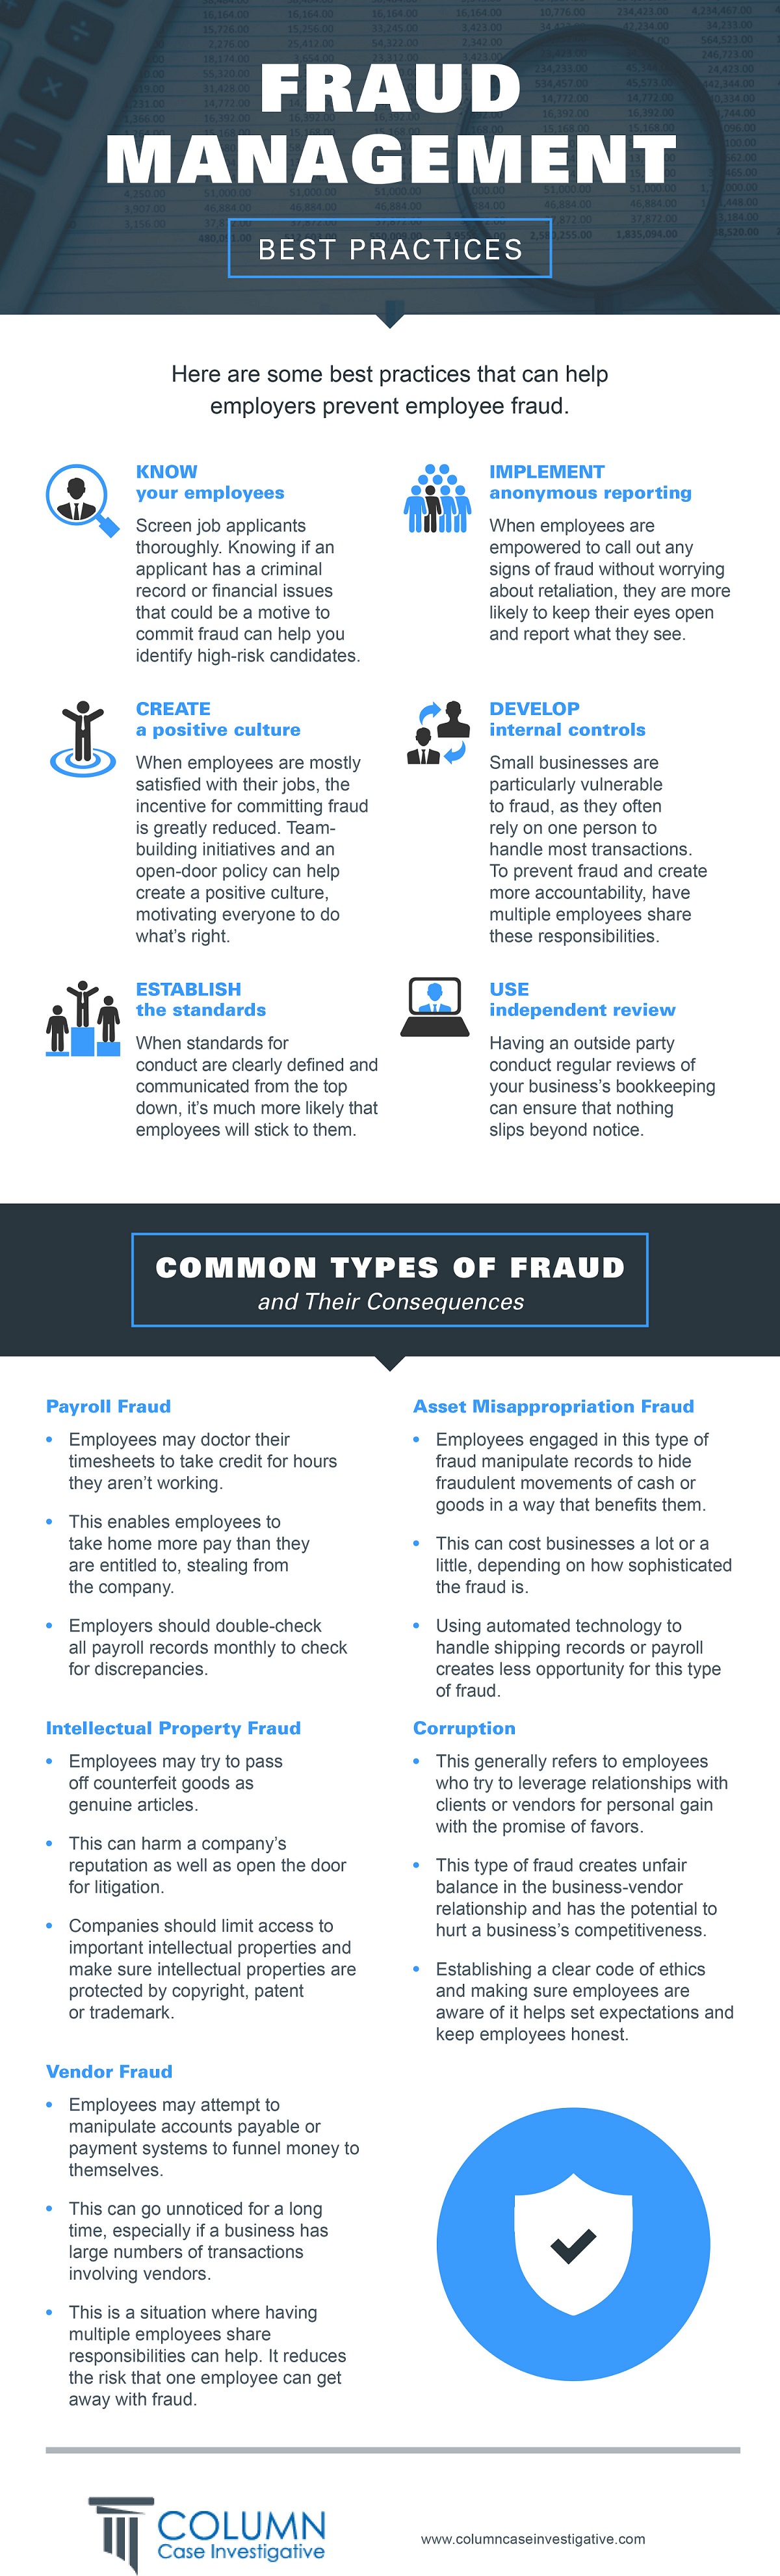 Fraud management infographic